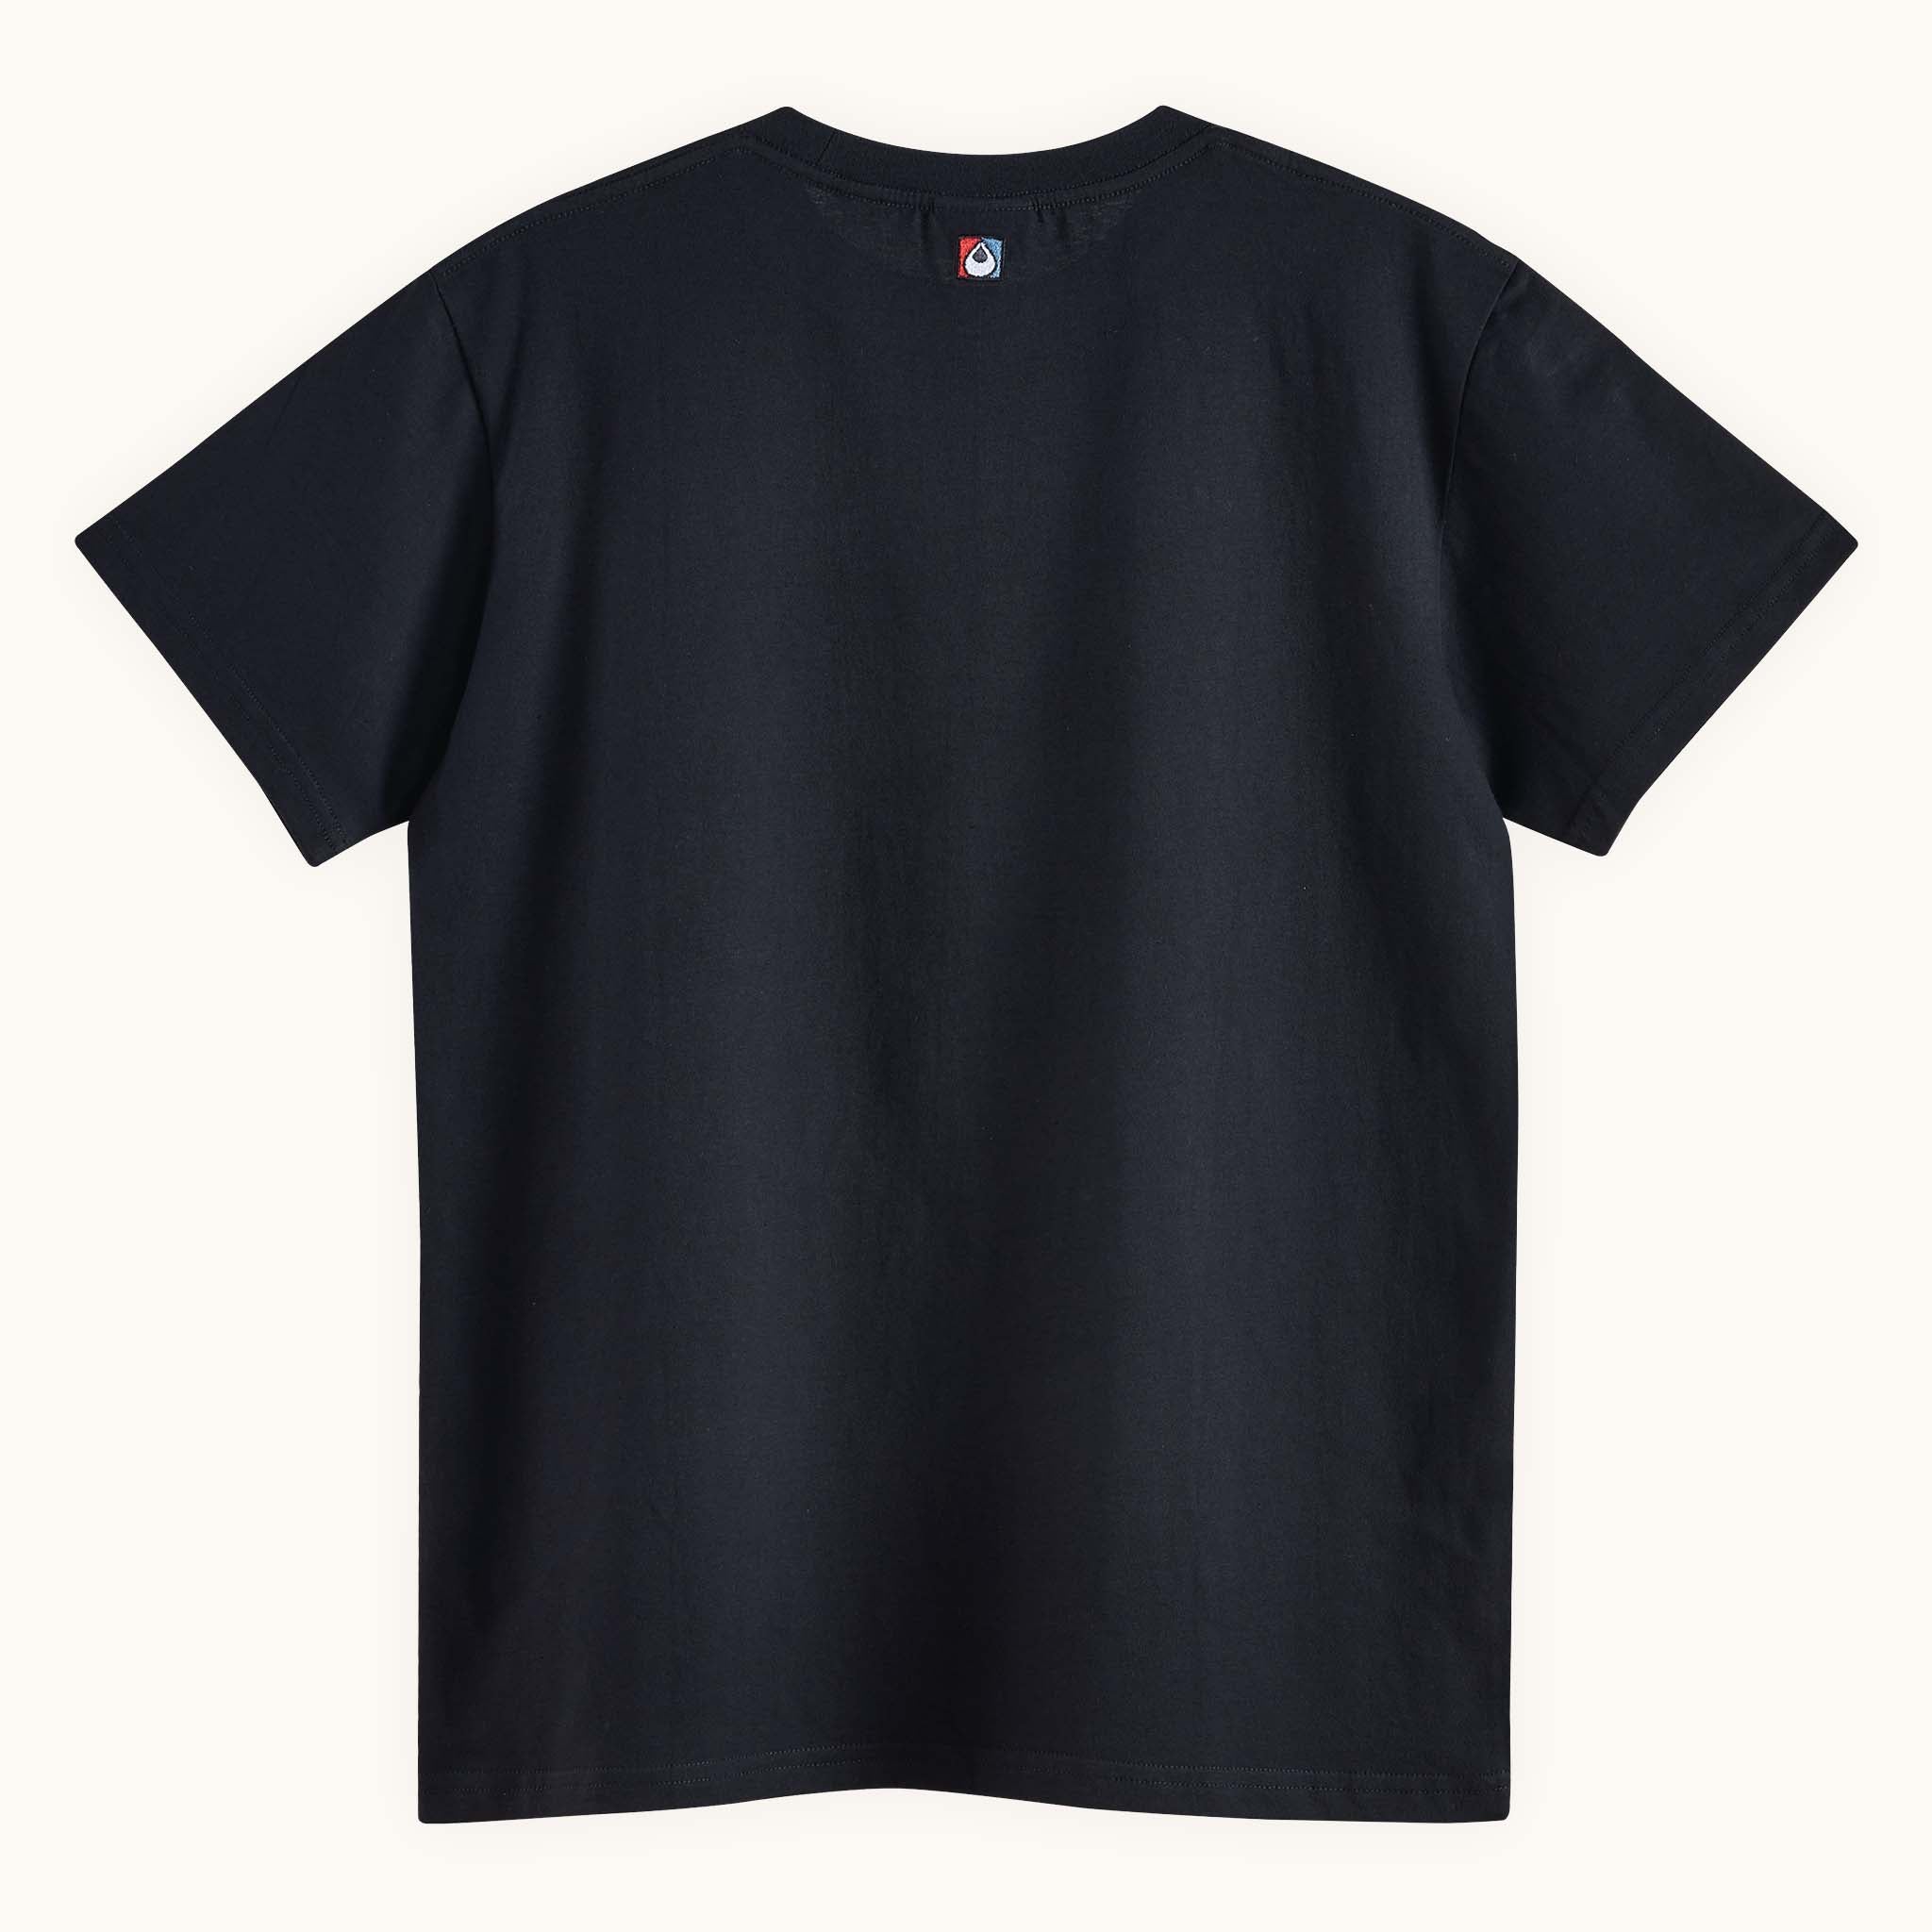 mens black vintage style printed t-shirt